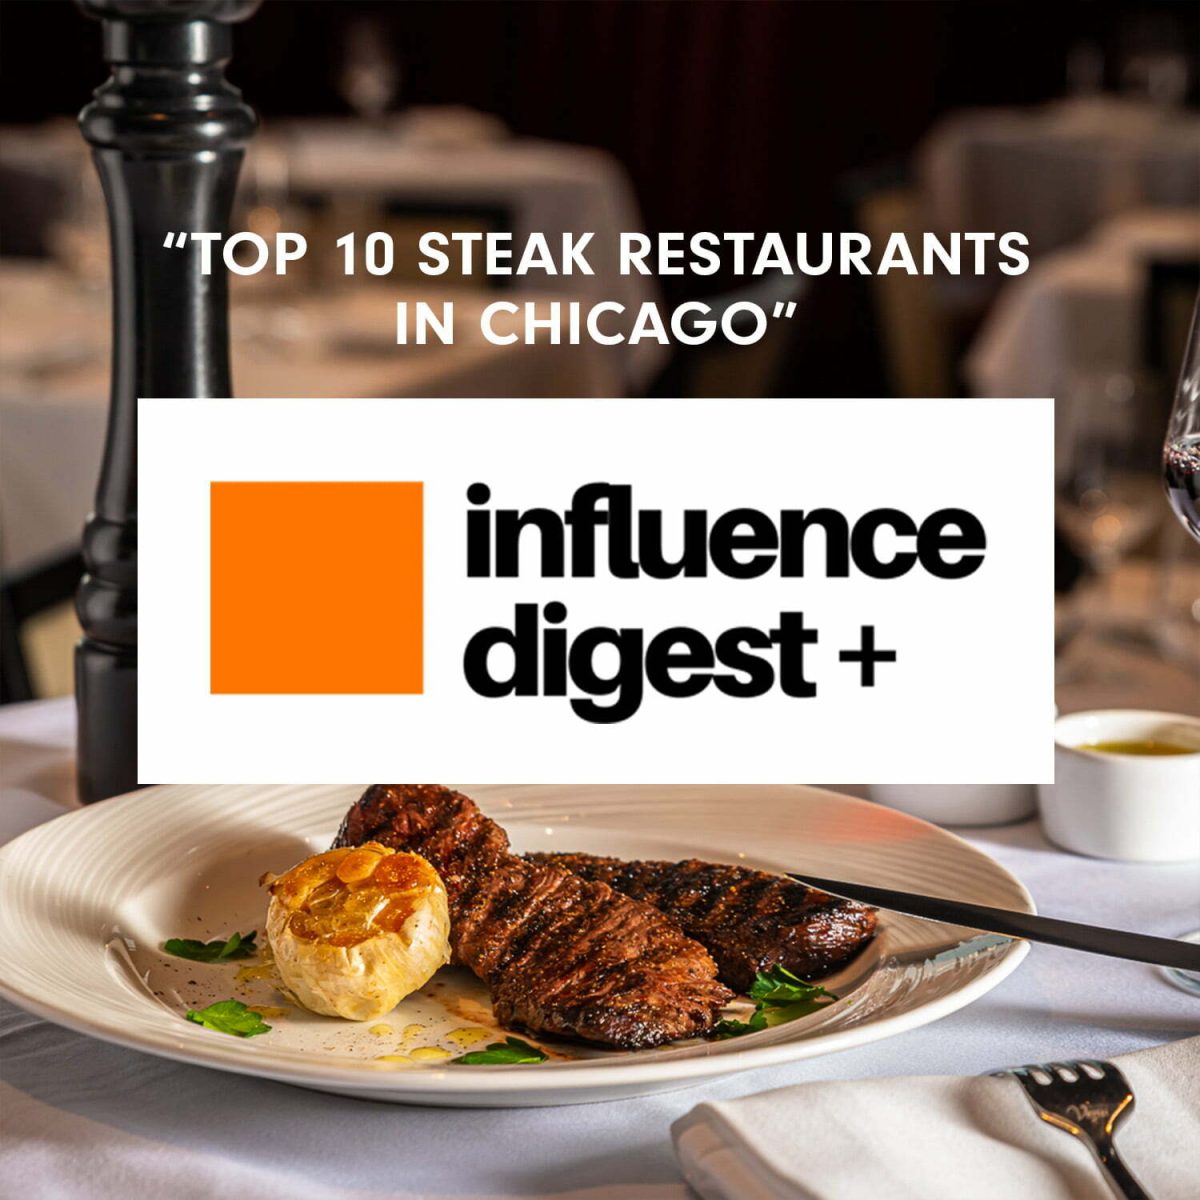 Top 10 Steak Restaurants in Chicago